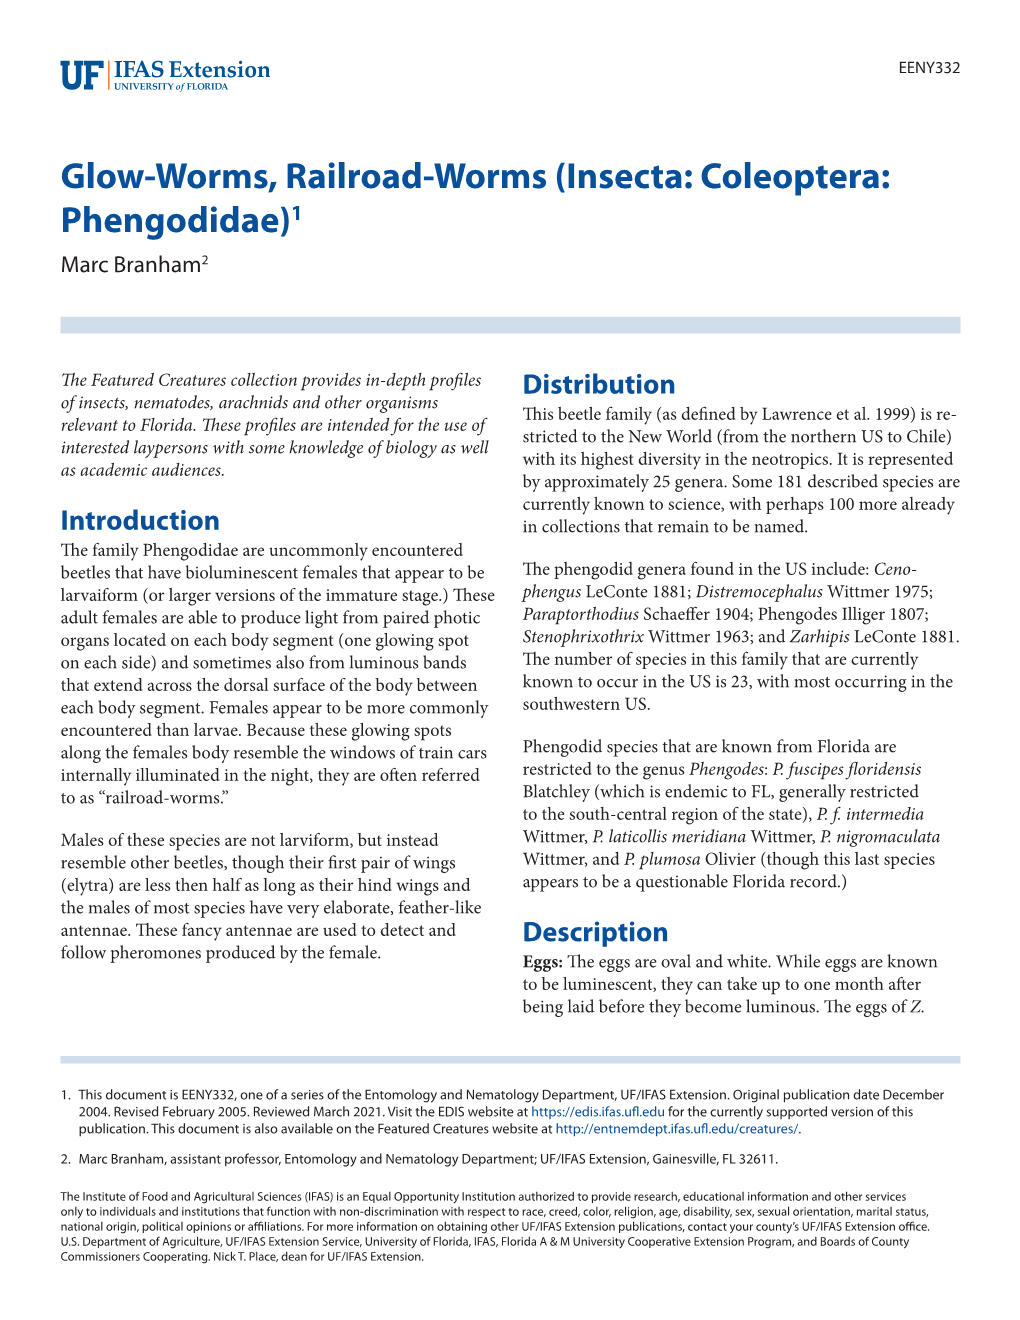 Glow-Worms, Railroad-Worms (Insecta: Coleoptera: Phengodidae)1 Marc Branham2